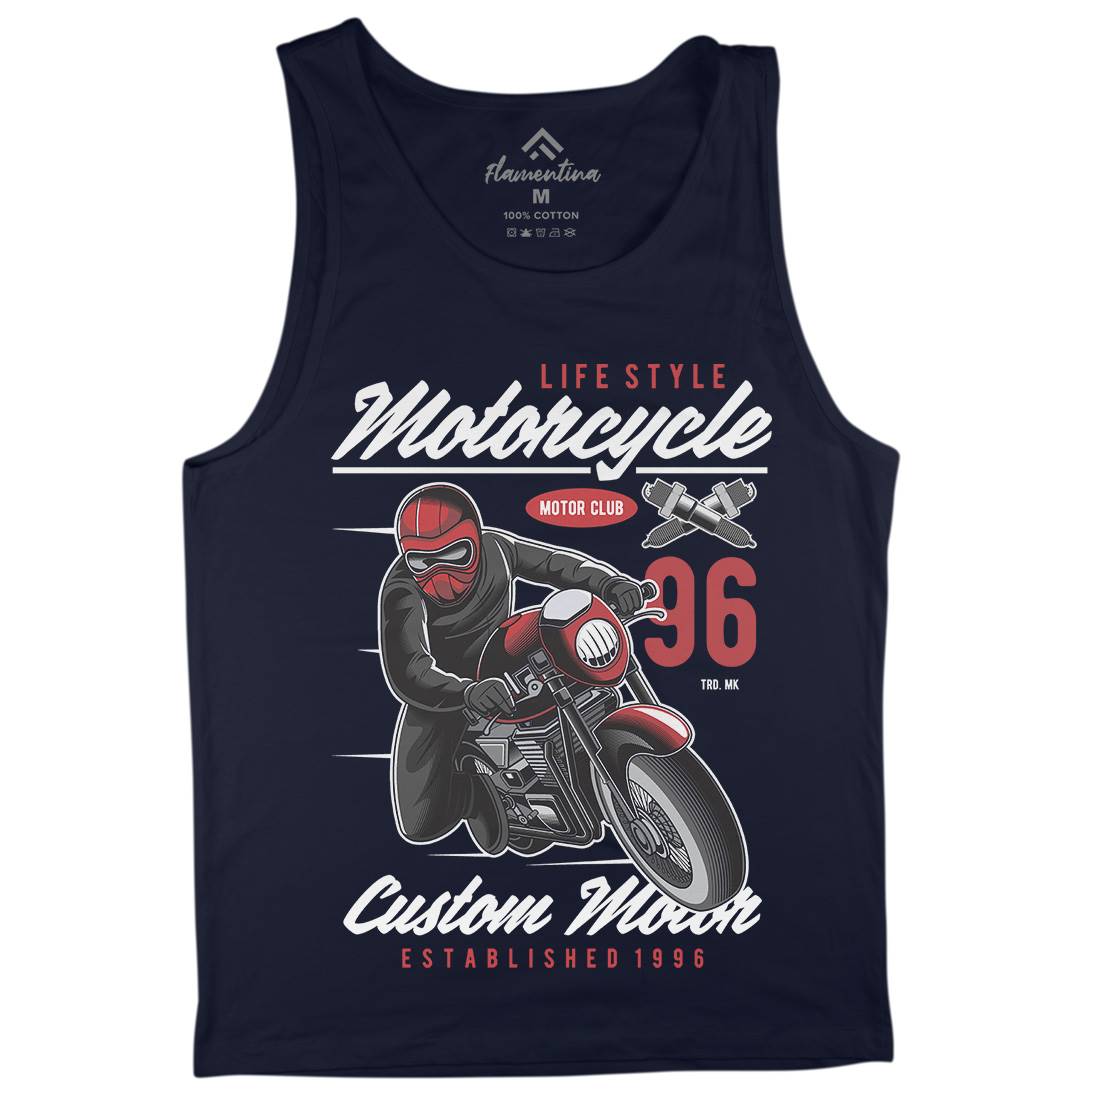 Lifestyle Mens Tank Top Vest Motorcycles C399